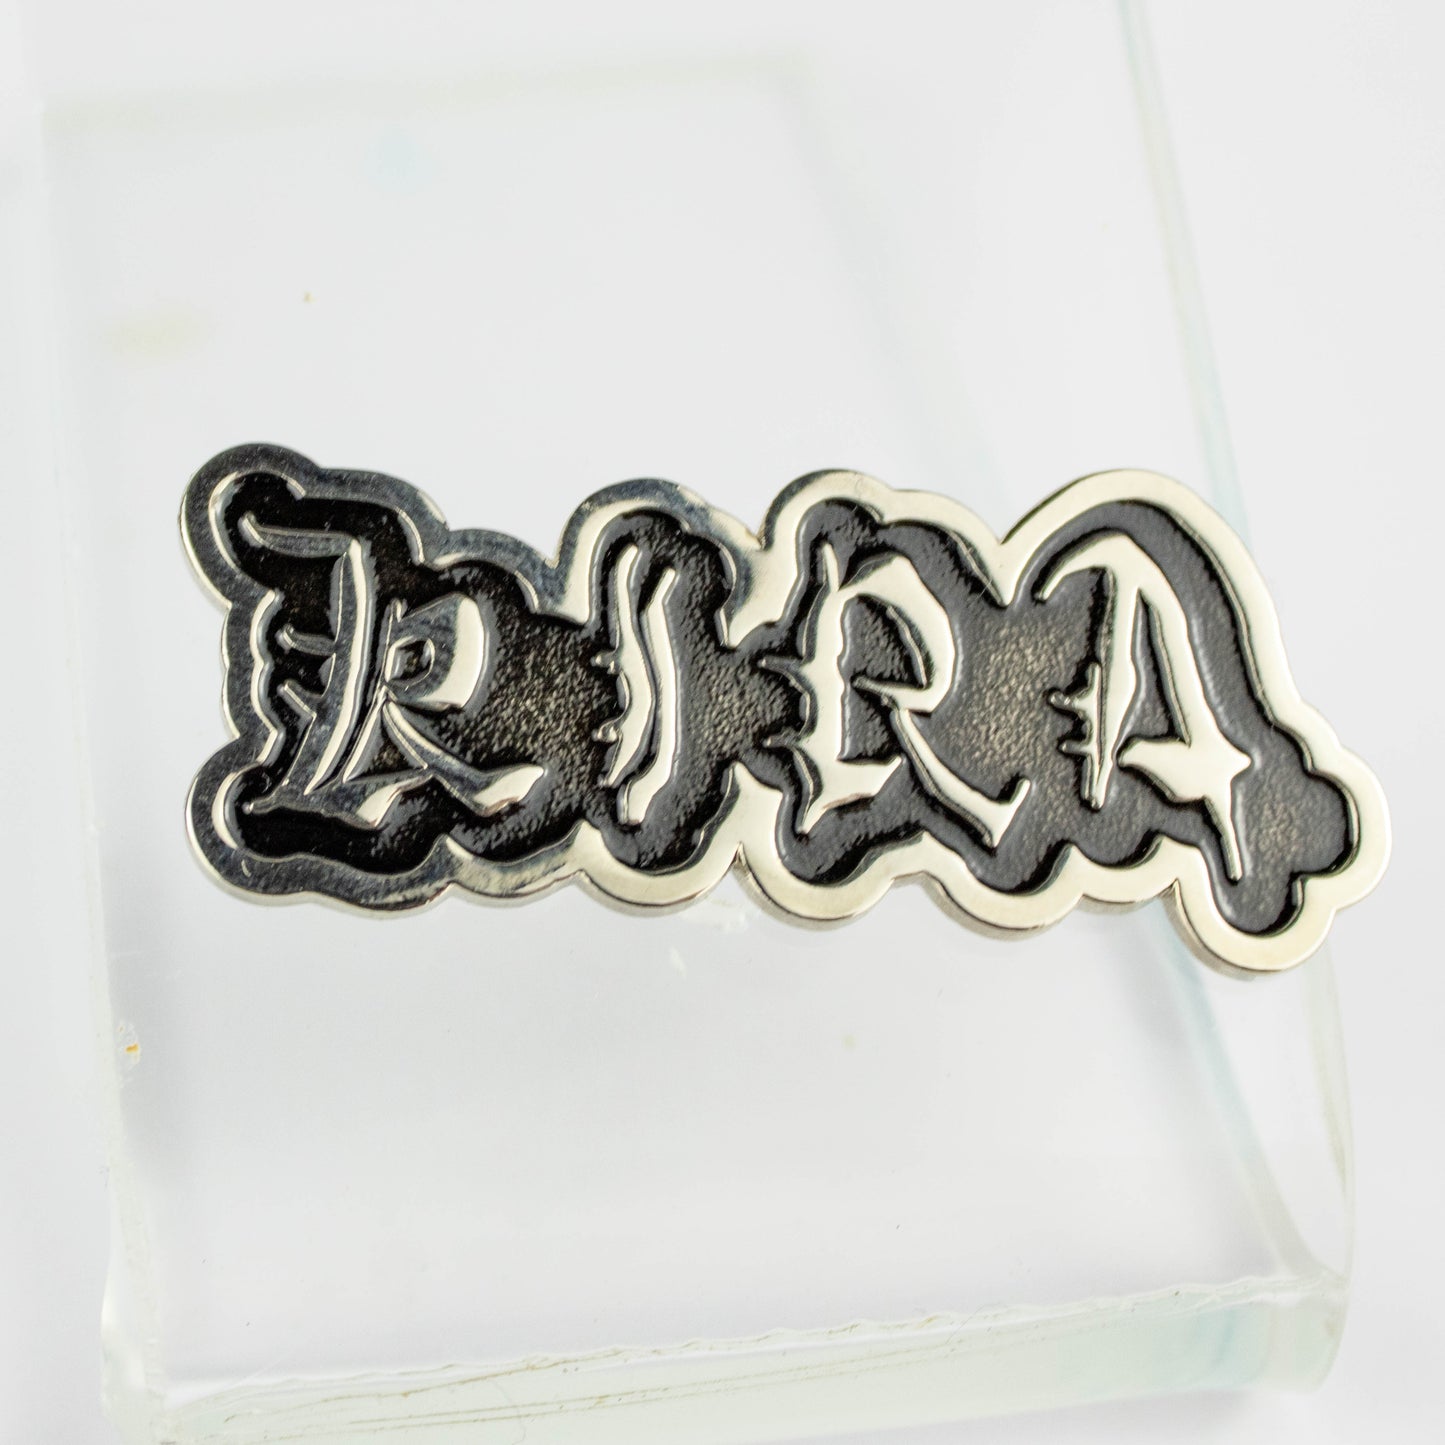 Kira & Apple Death Note Metal Pin Set